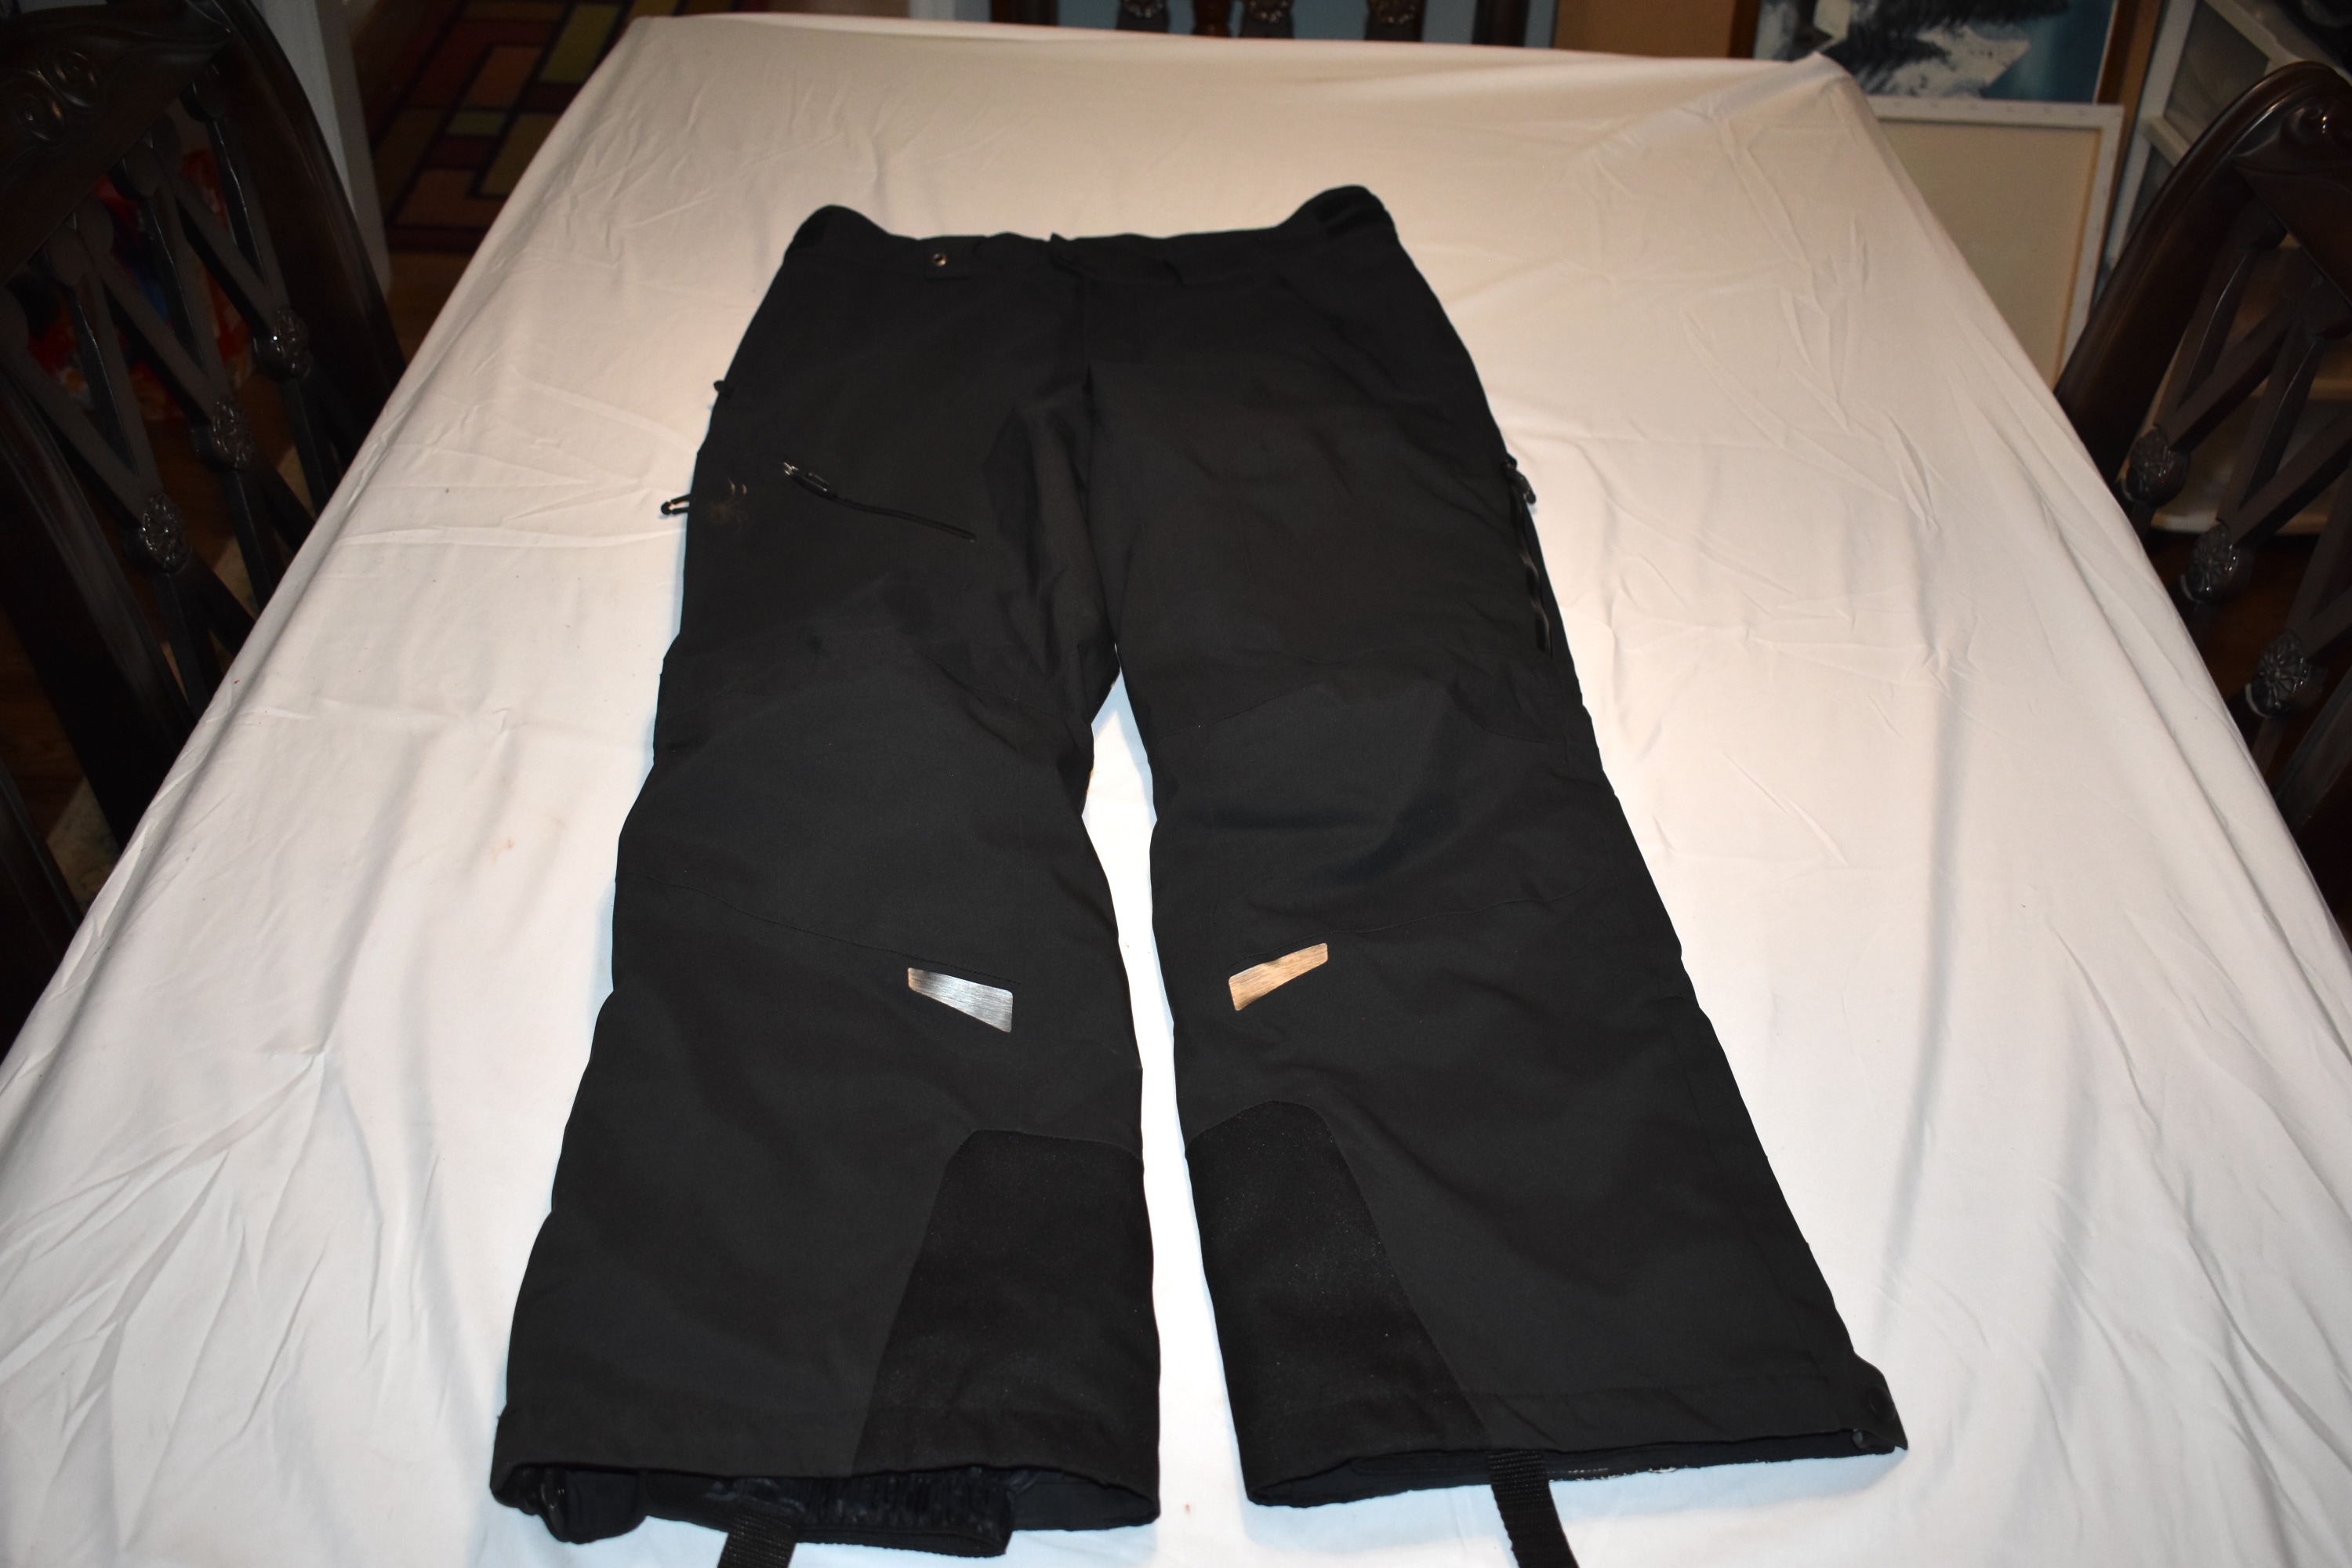 Spyder Spylon Xtl 20/20 Thinsulate Ski Pants, Black, Men's Medium - Great Condition!